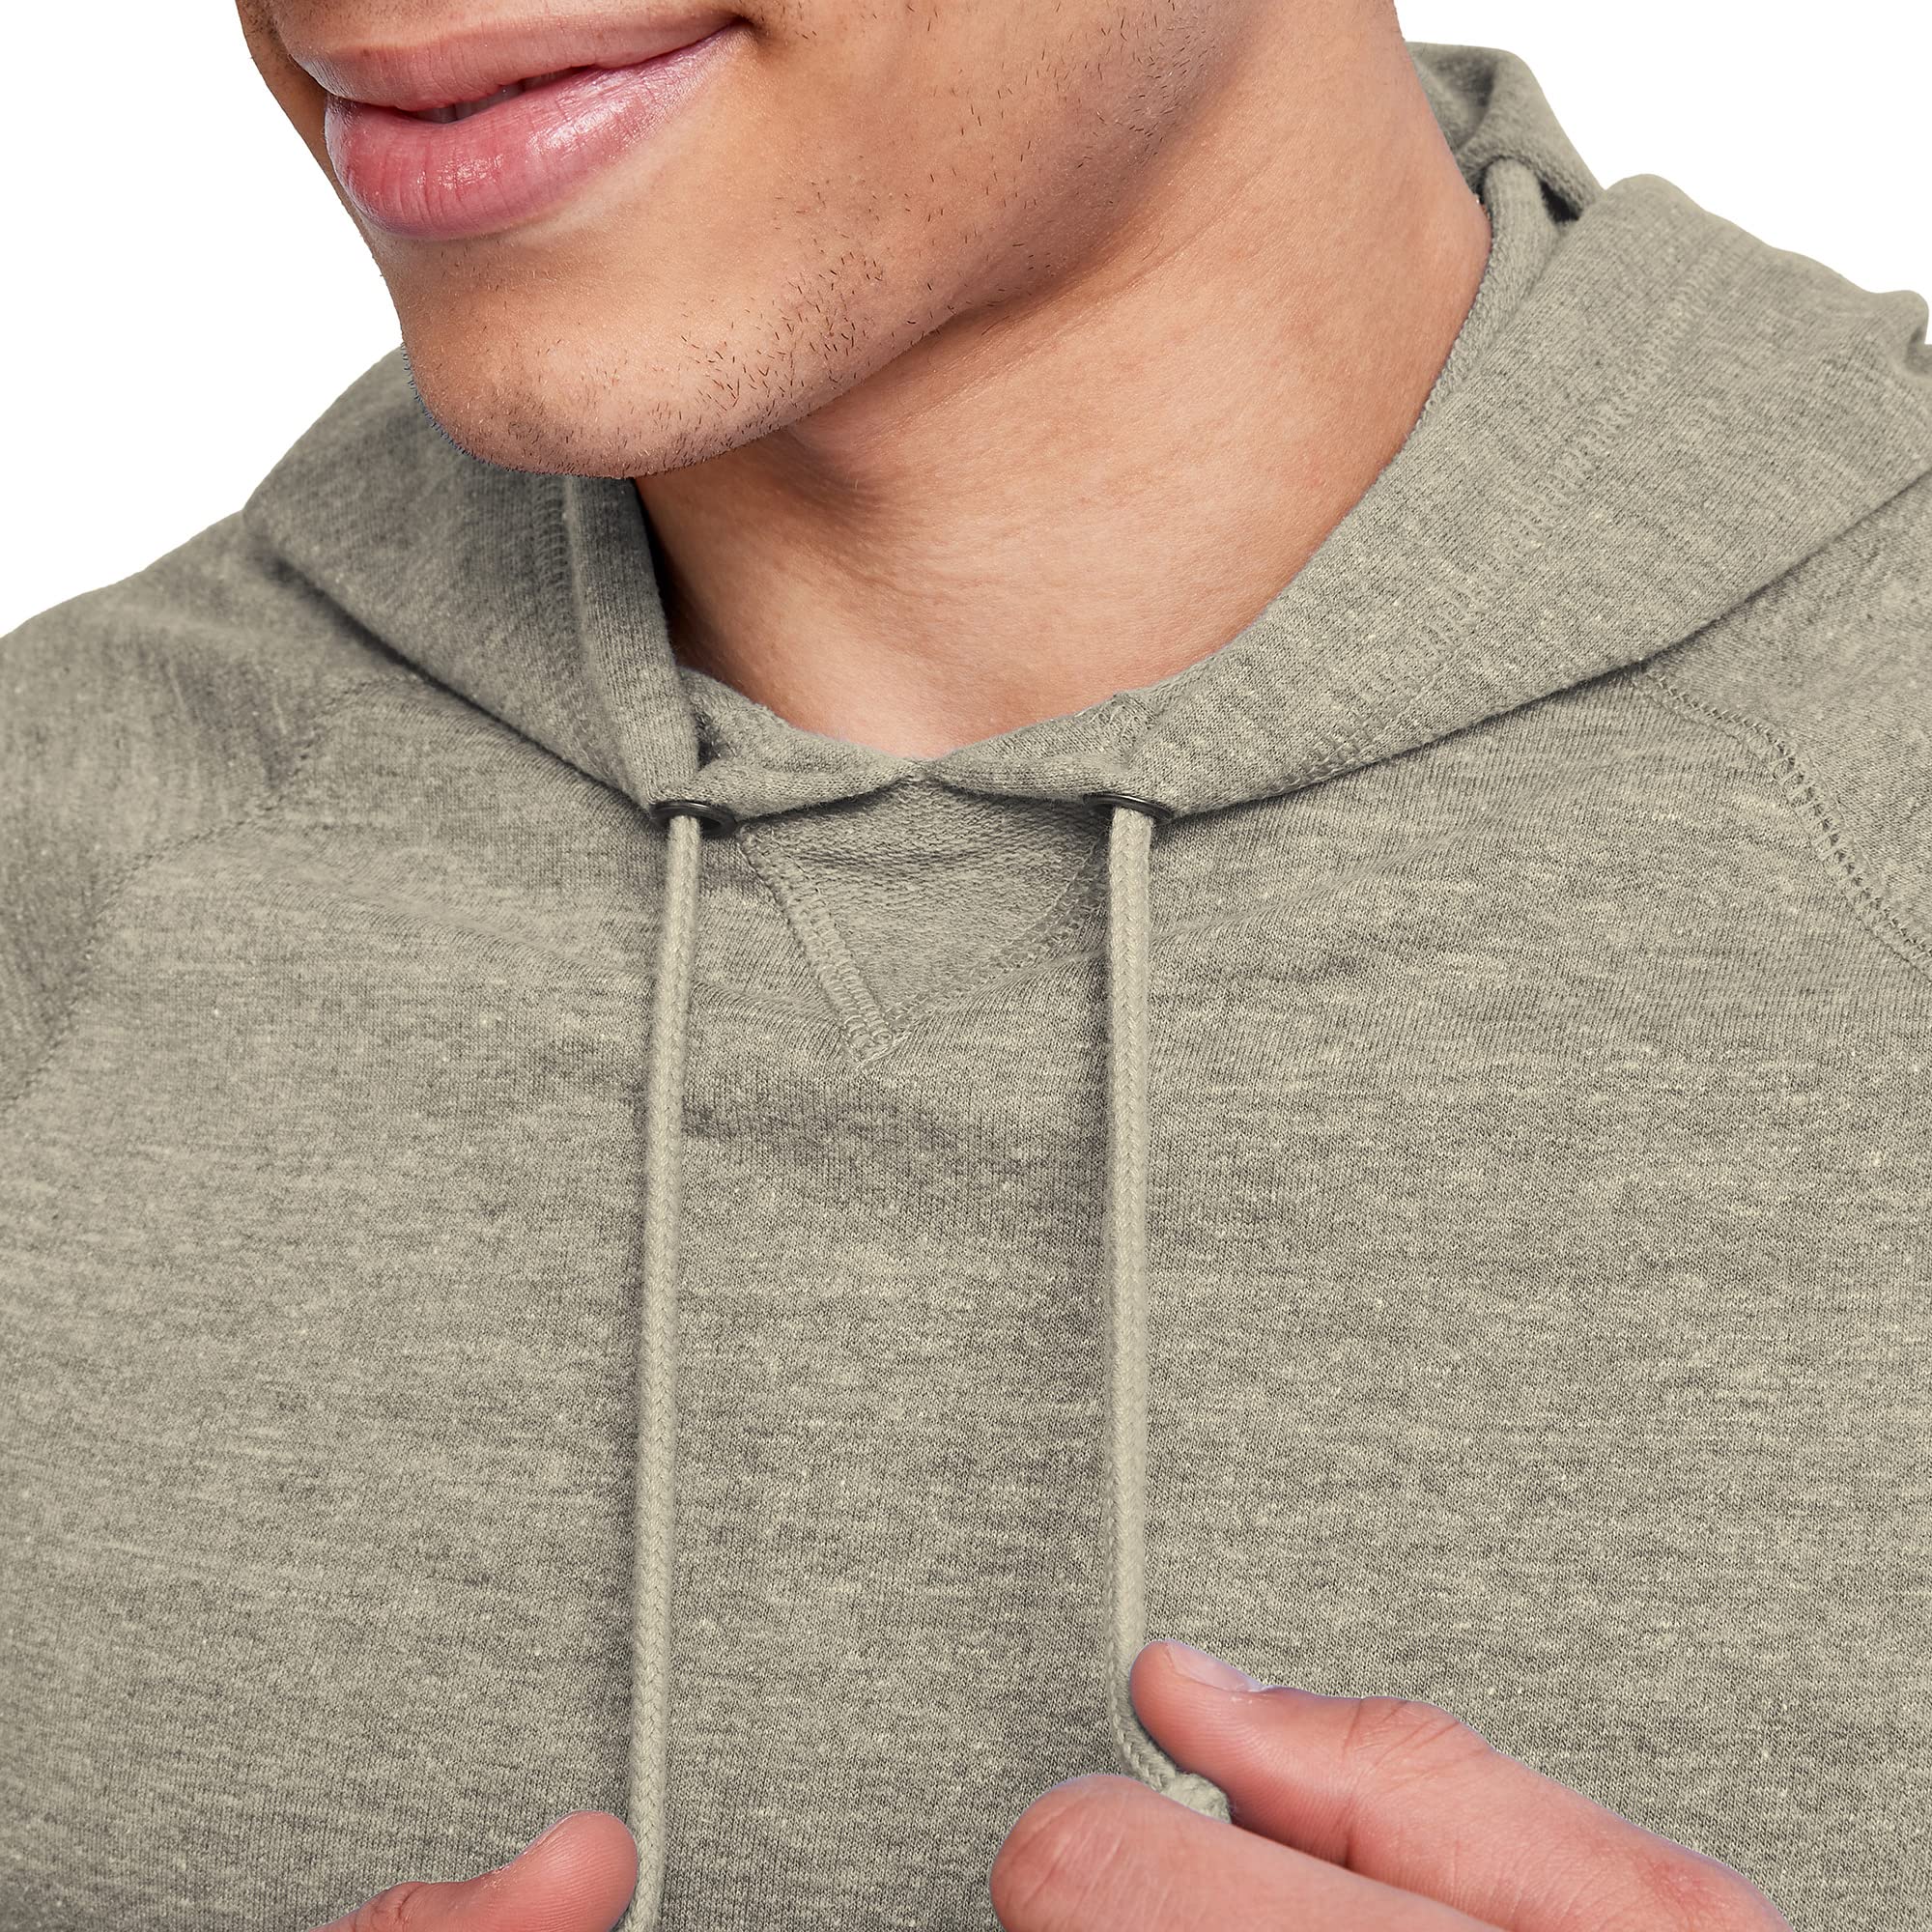 Hanes Men's Hoodie, Sweatshirt for Men, French Terry Hooded Sweatshirt